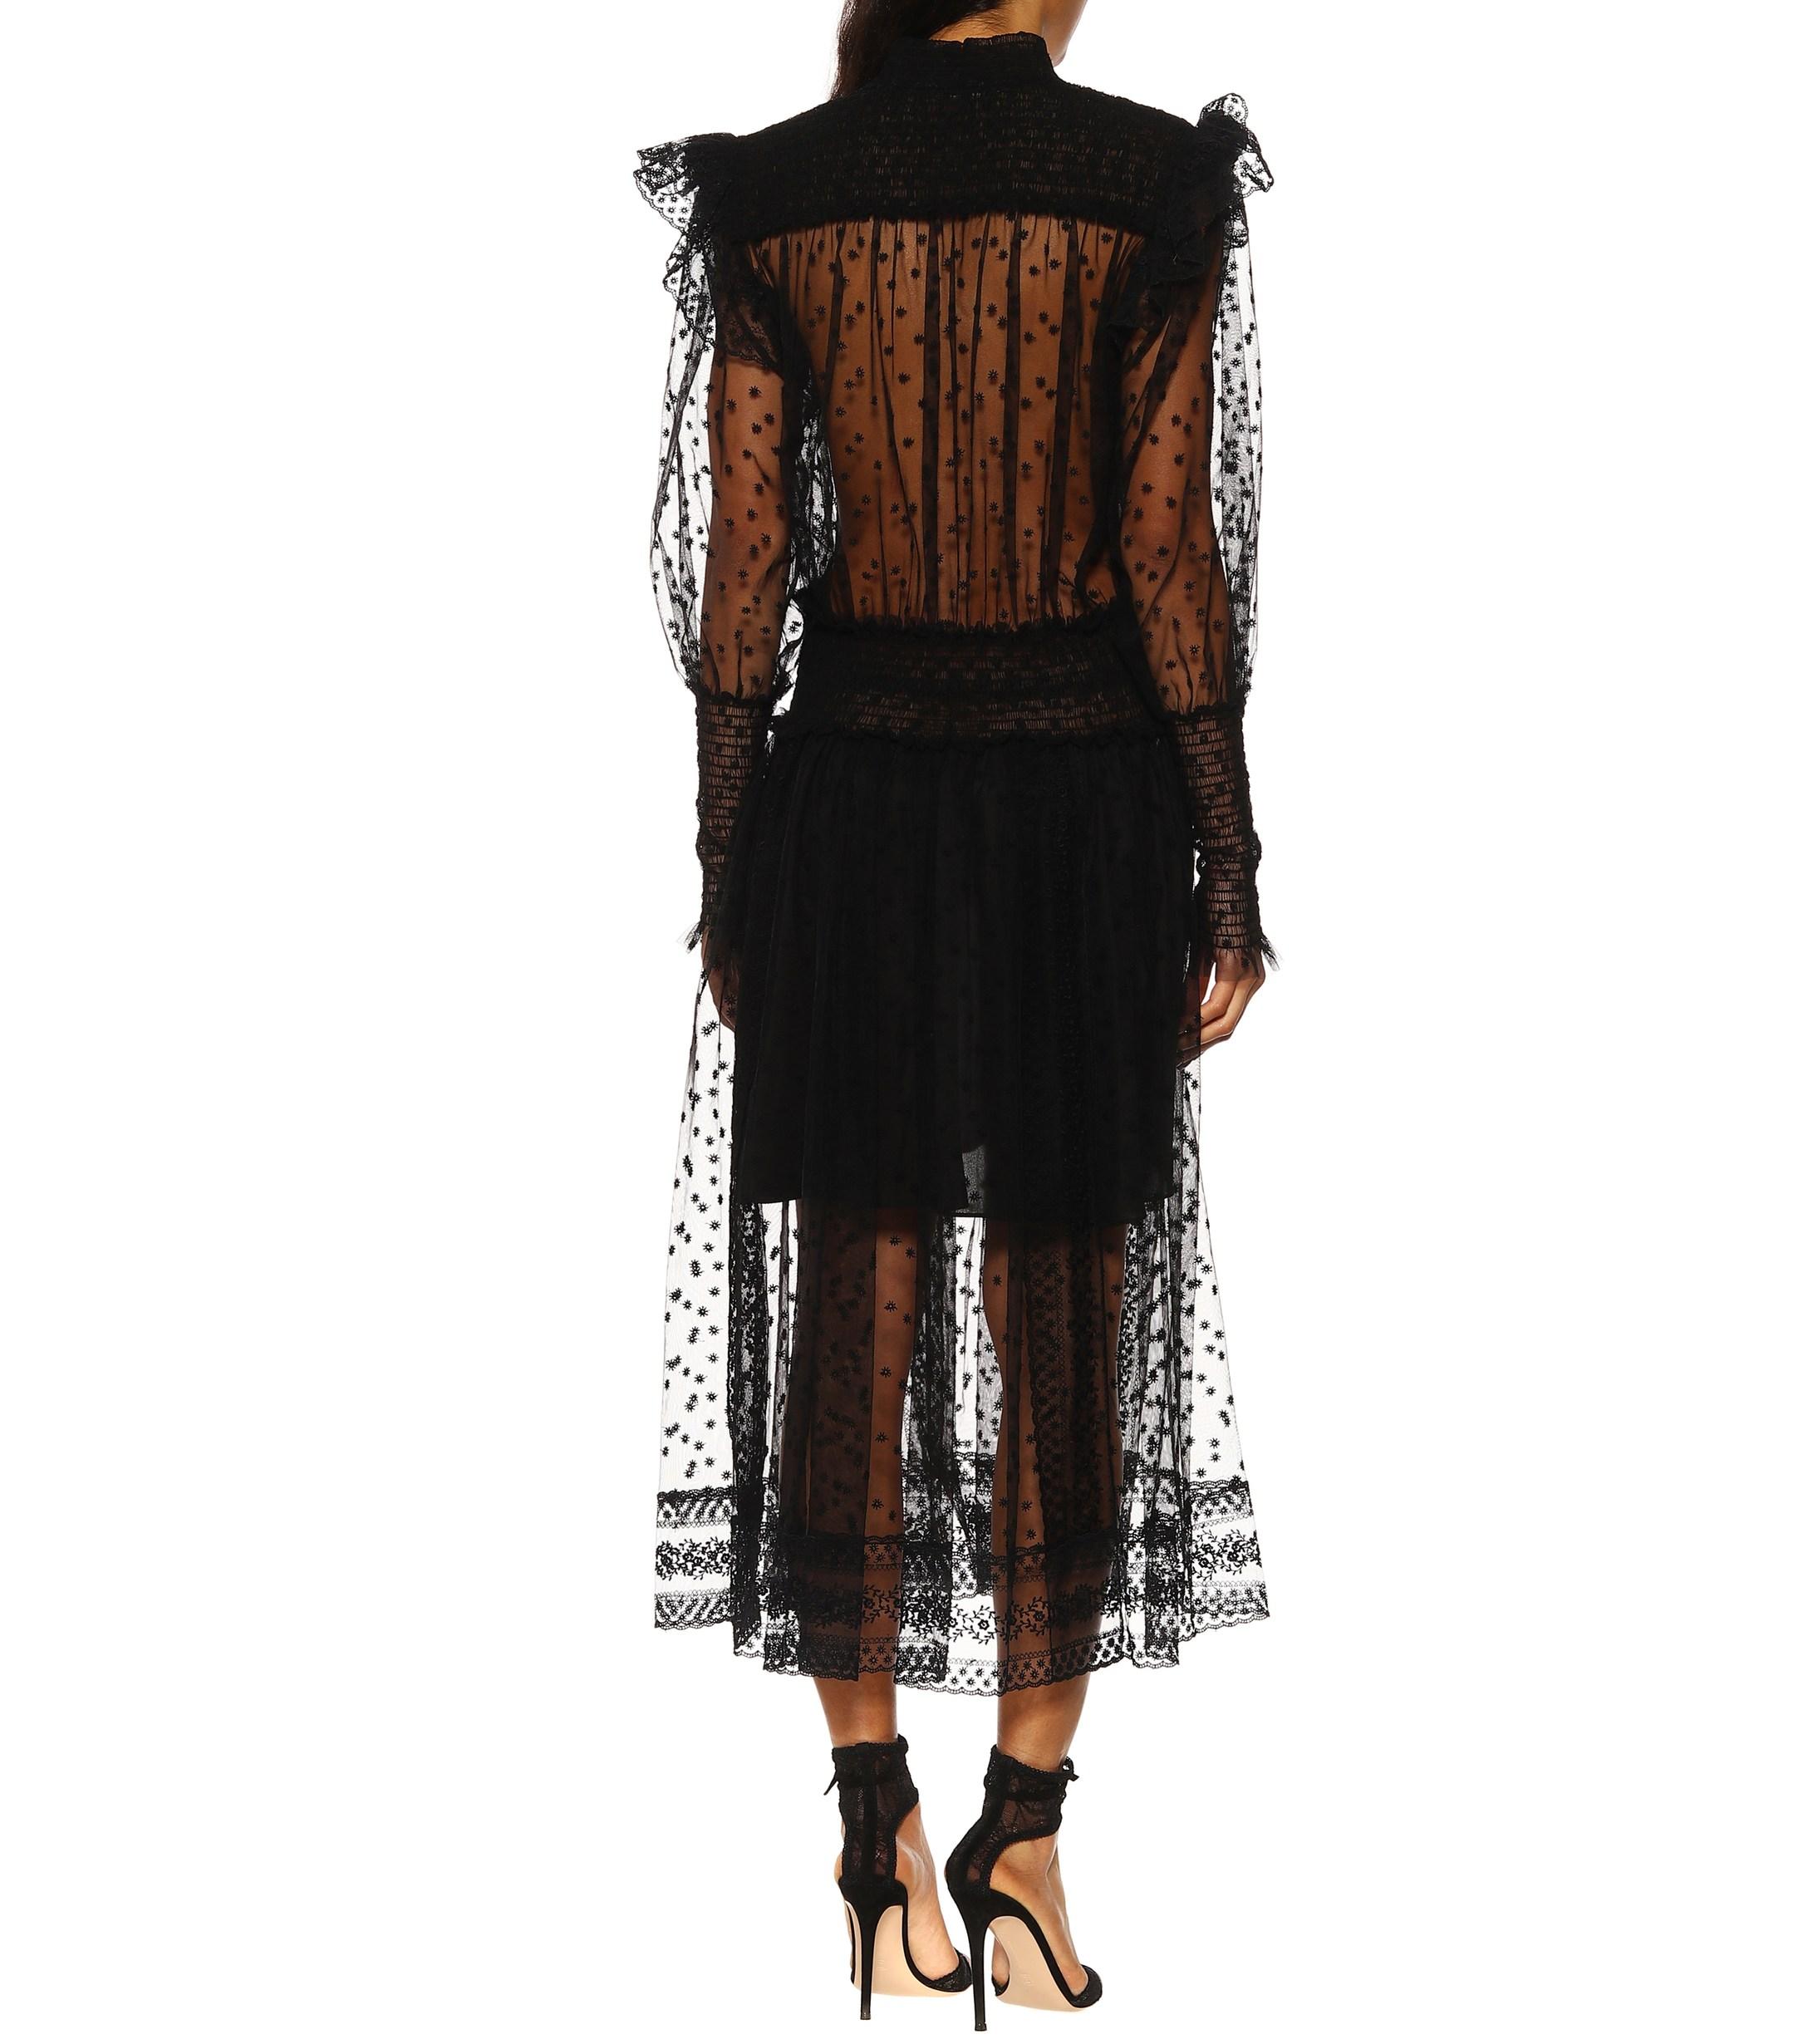 Philosophy Di Lorenzo Serafini Embroidered Chiffon Dress in Black - Lyst